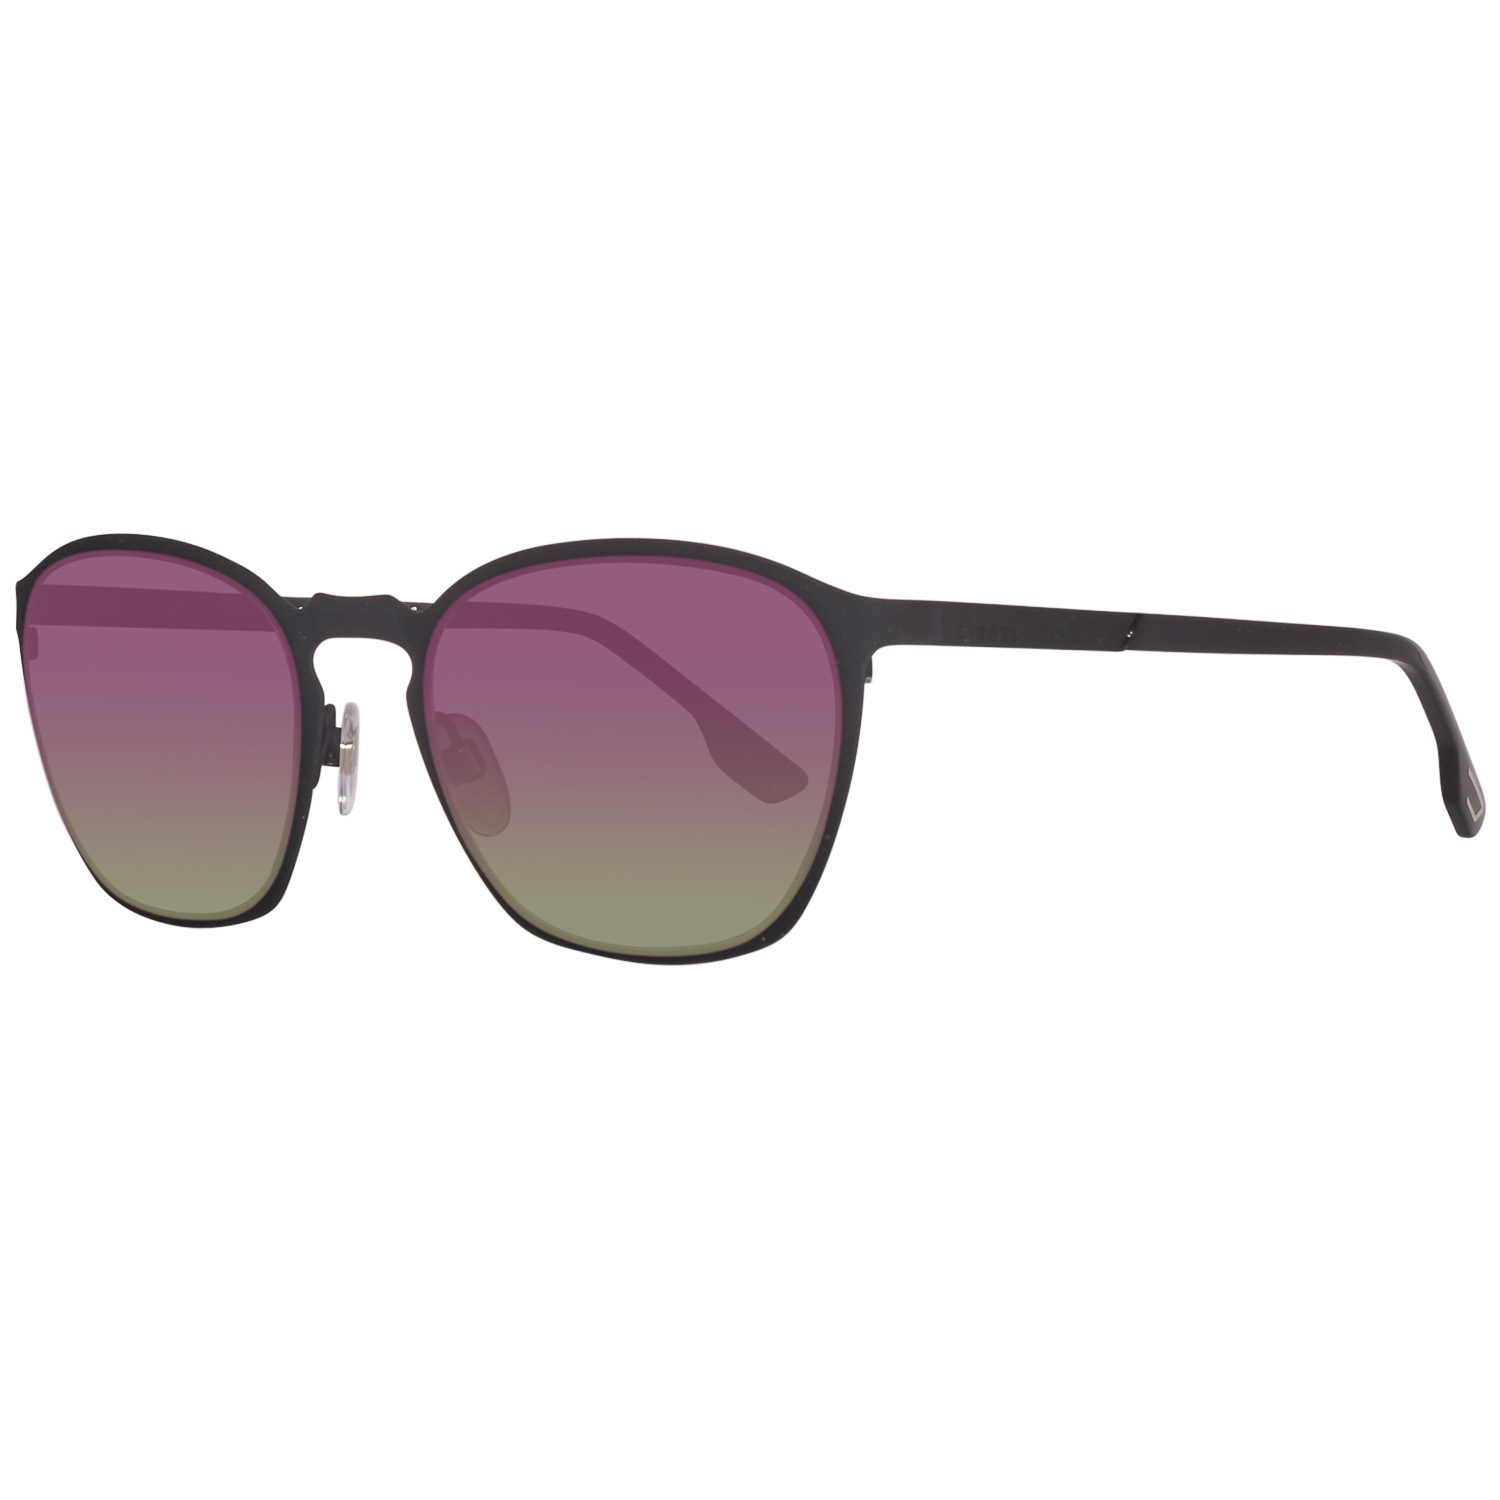 Diesel Sunglasses DL0153 02T 54